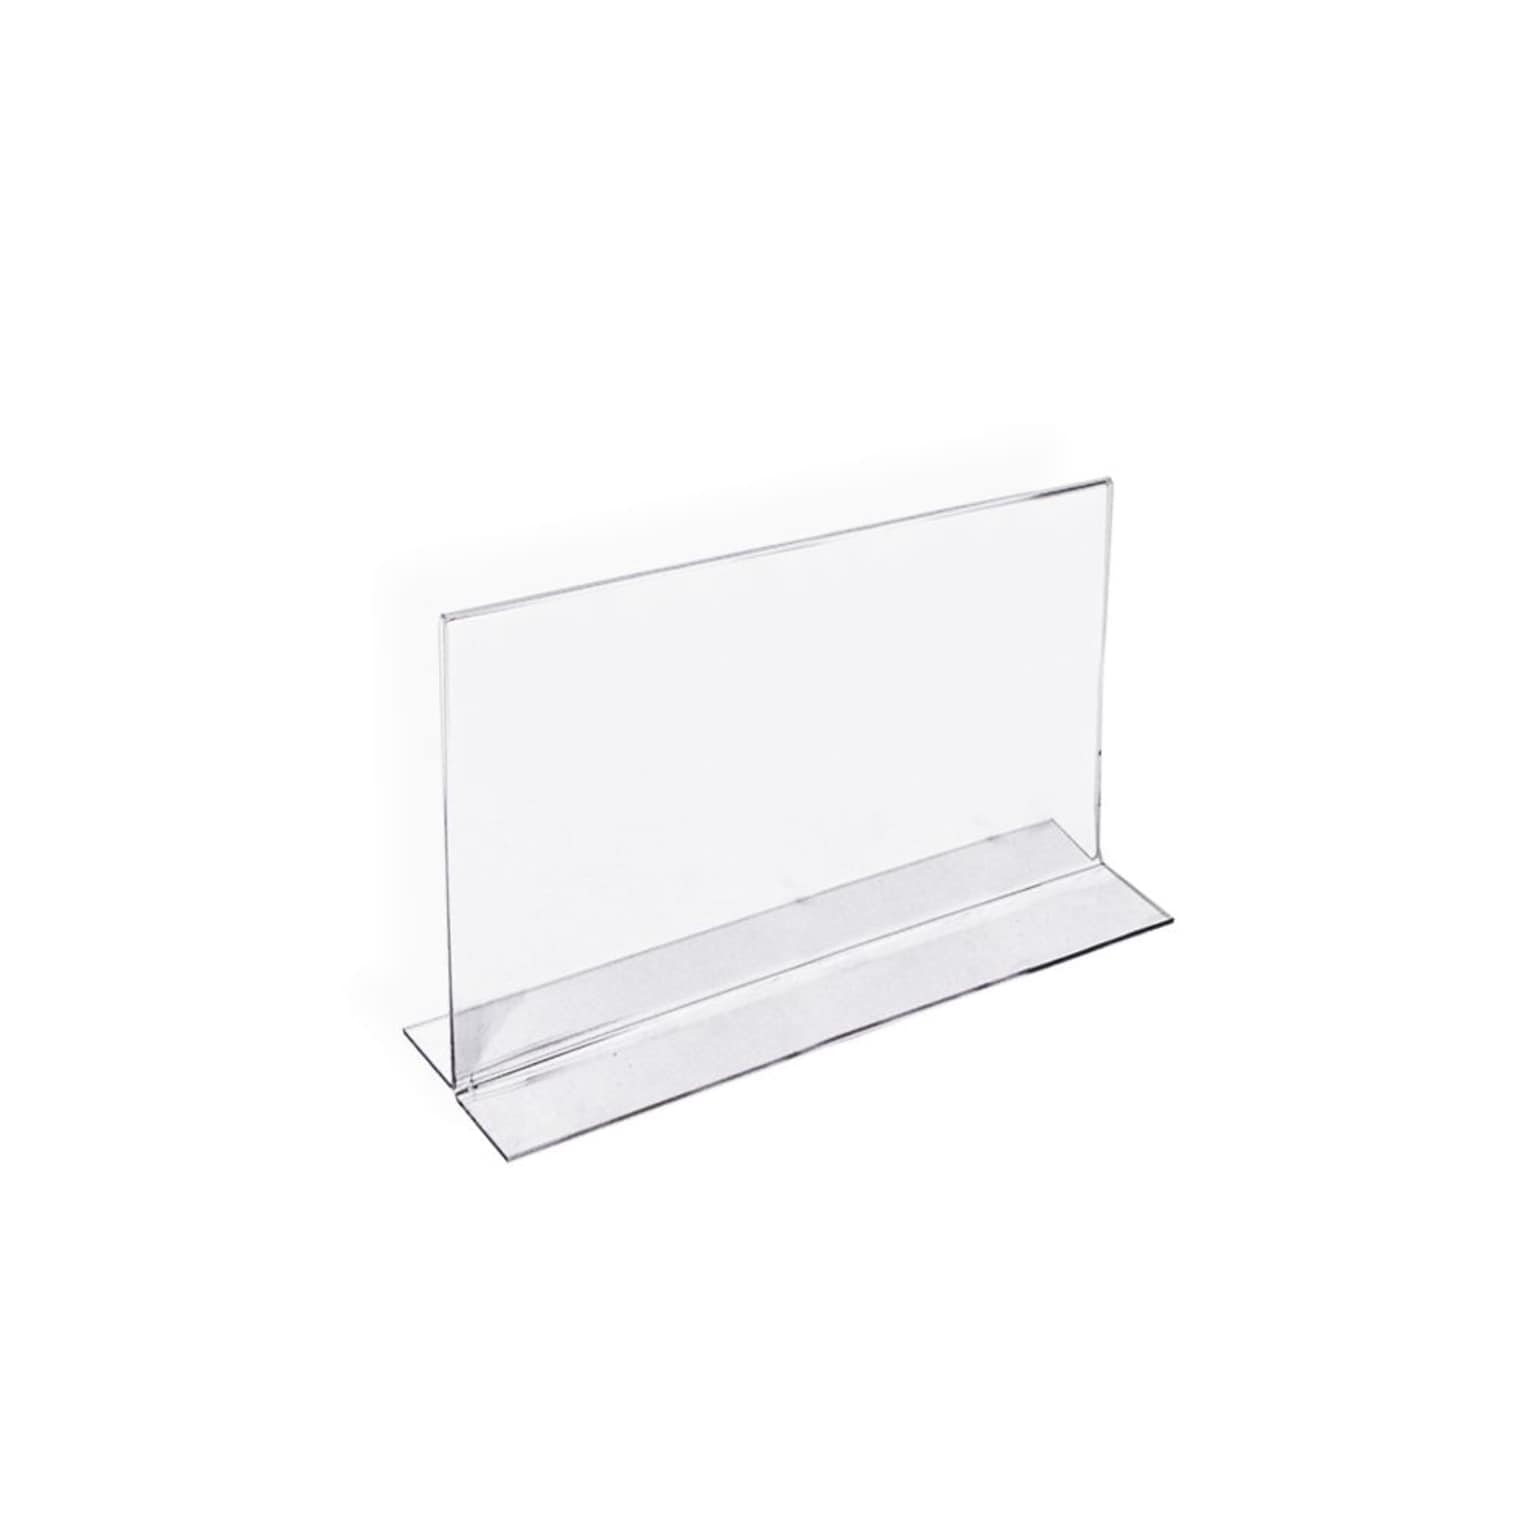 Azar Displays Bottom Loading Clear Acrylic T-Frame Sign Holder 6 Wide x 4High- Horizontal/Landscape, 10-Pack (152727)